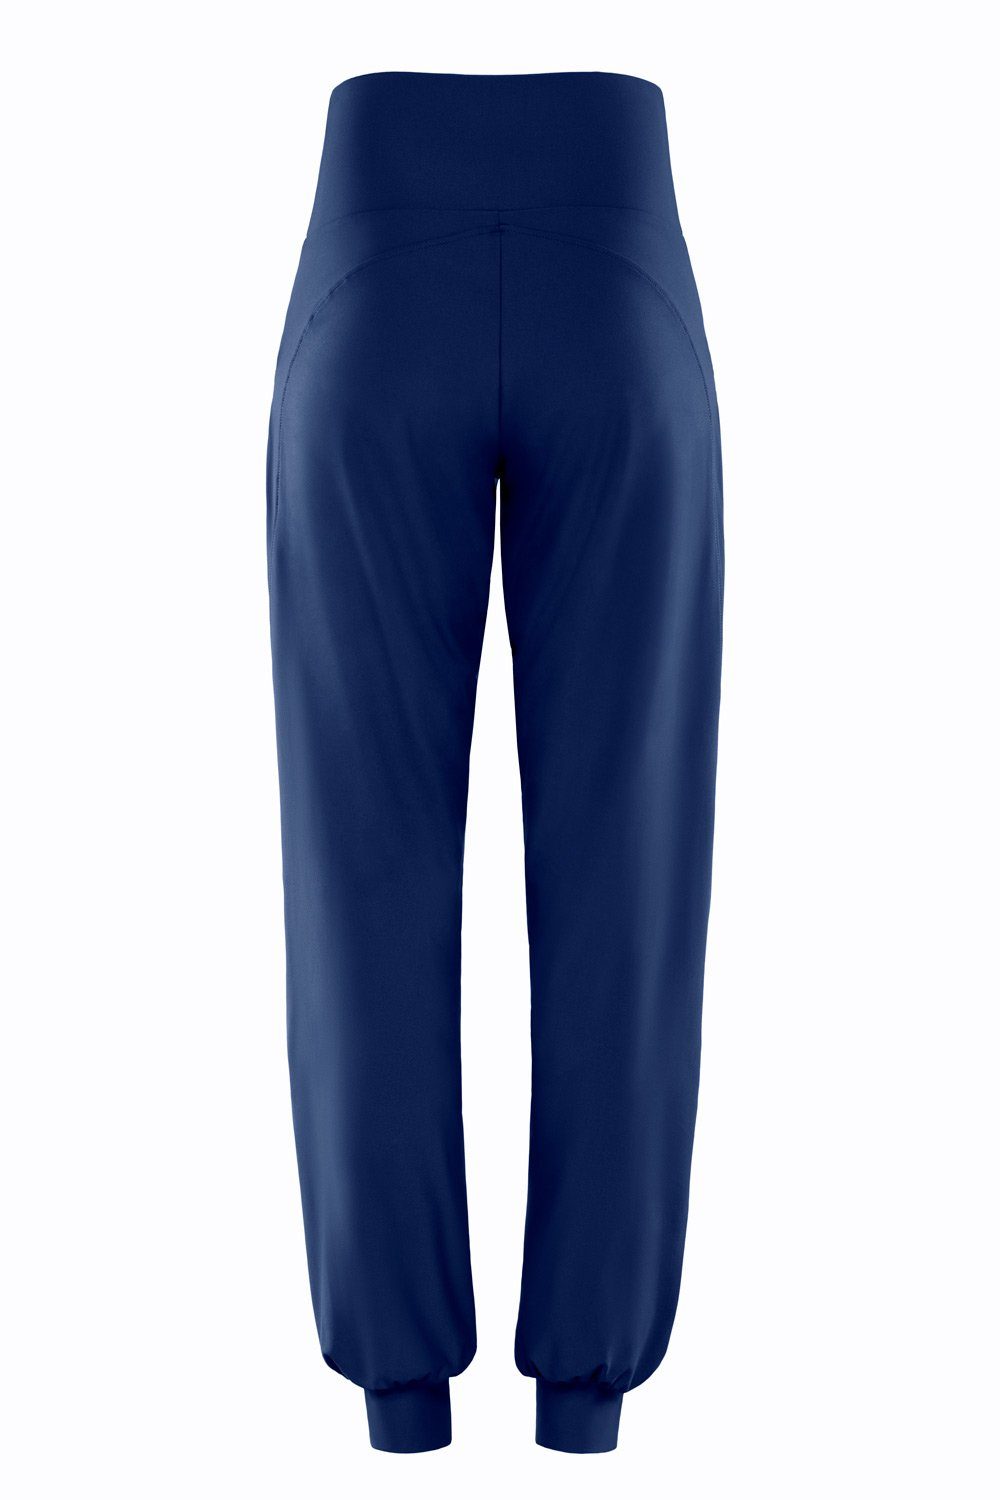 High Sporthose Trousers Winshape Time LEI101C Waist dark Comfort blue Functional Leisure